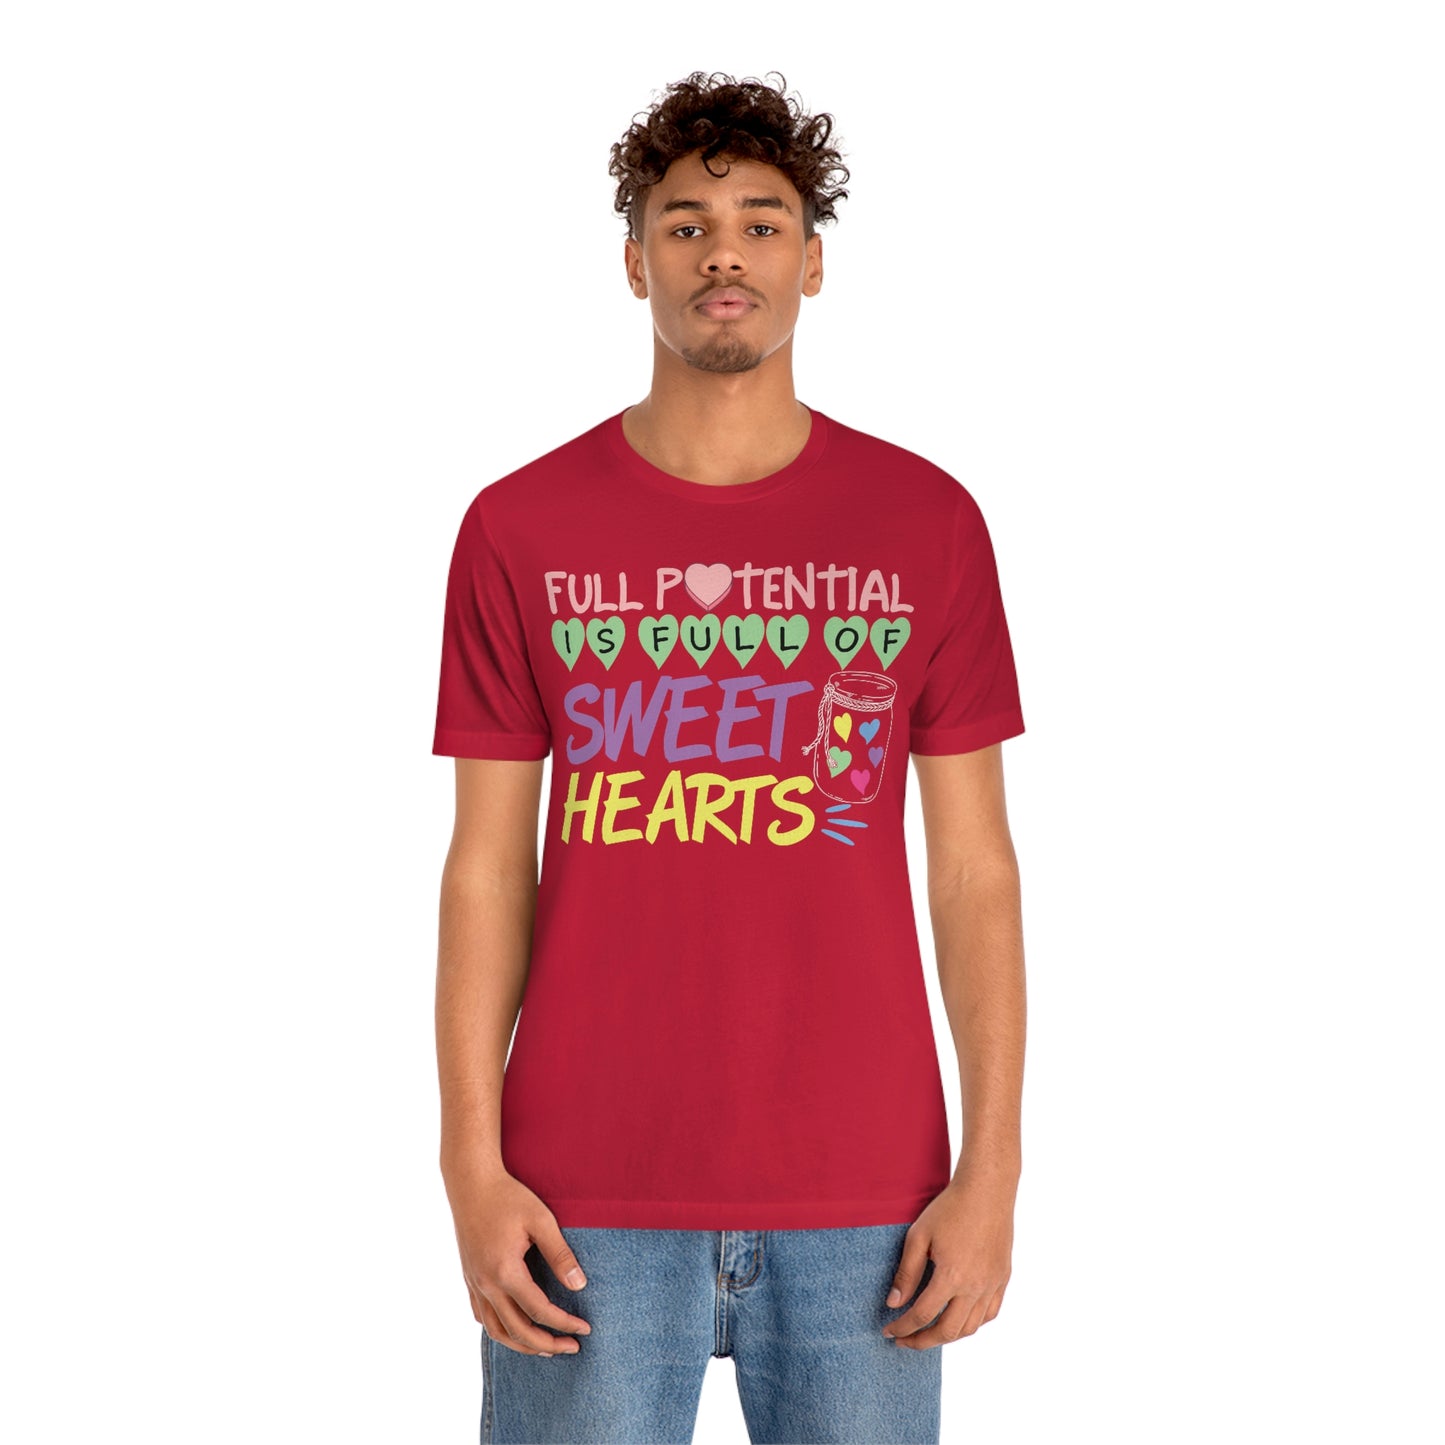 Full PotentialIs Full Of Sweet Hearts Shirt